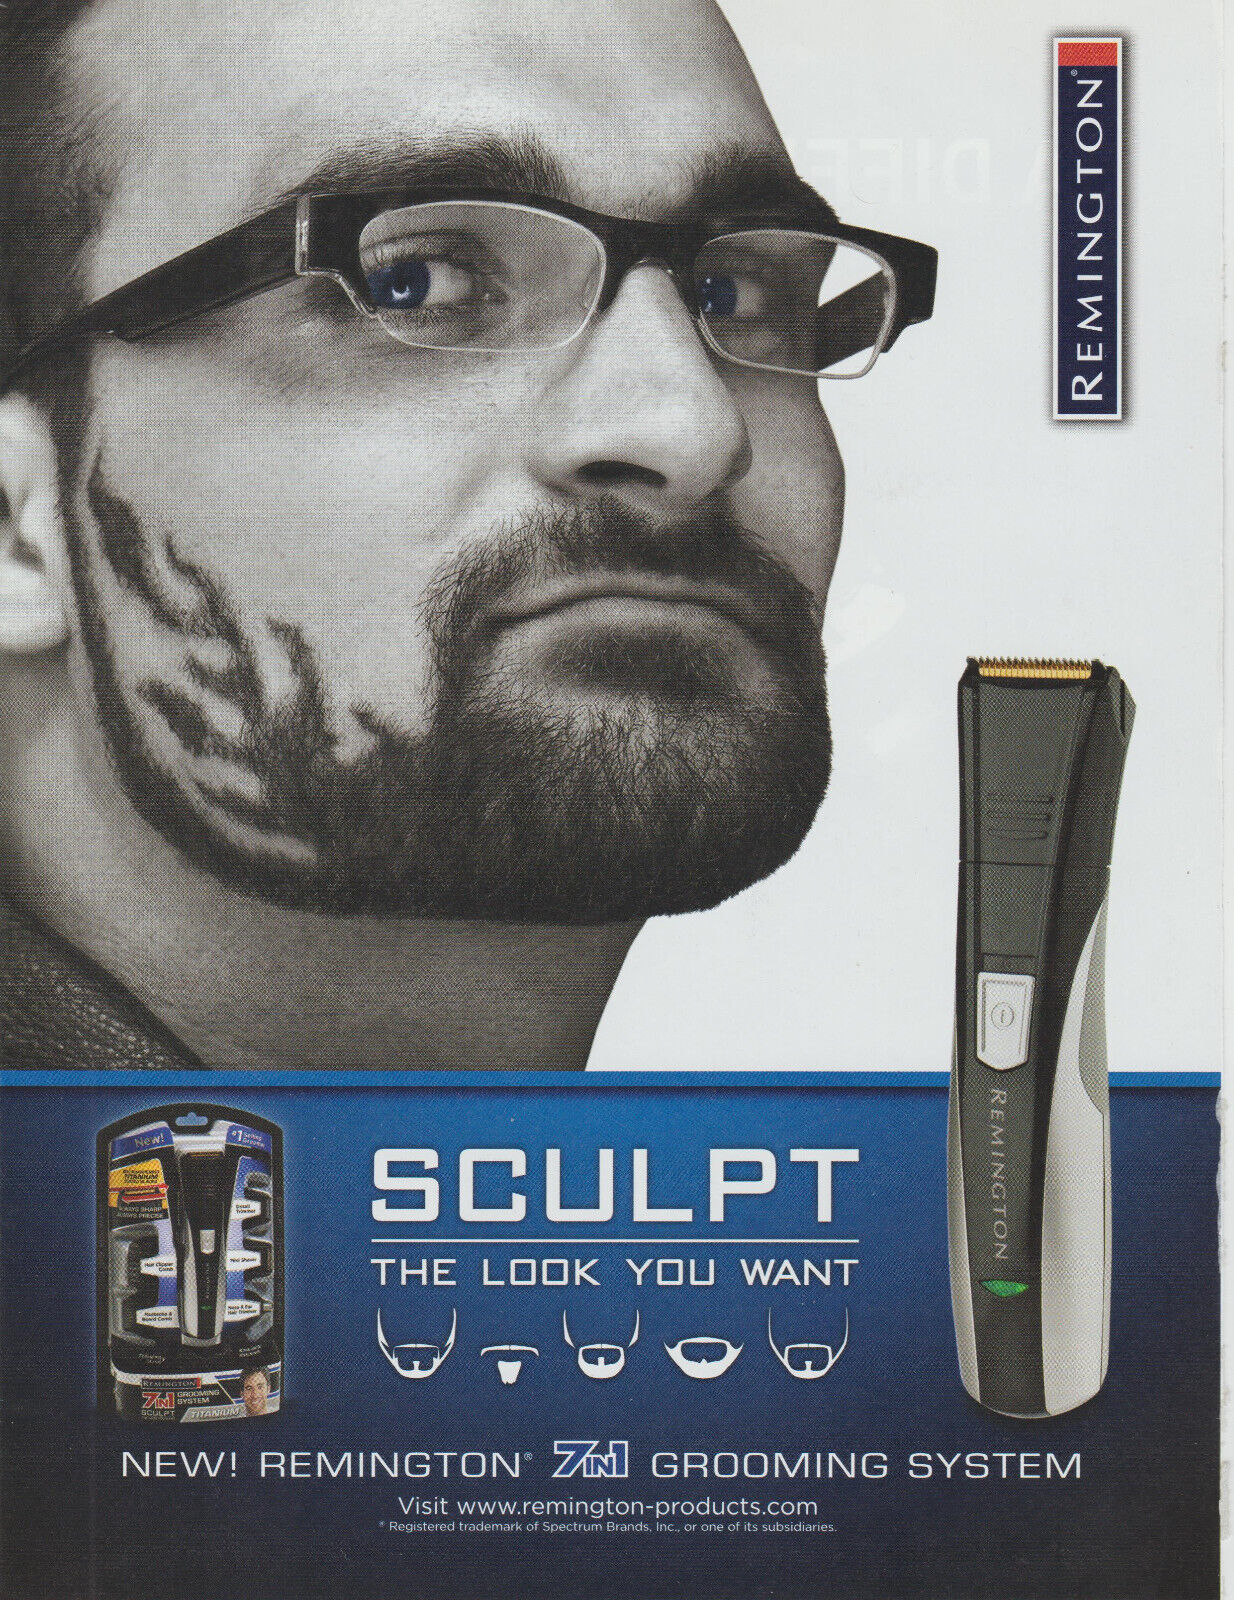 2010 Remington Razors - Artistic Guy Shaves Flames Into Beard - Print Ad Photo